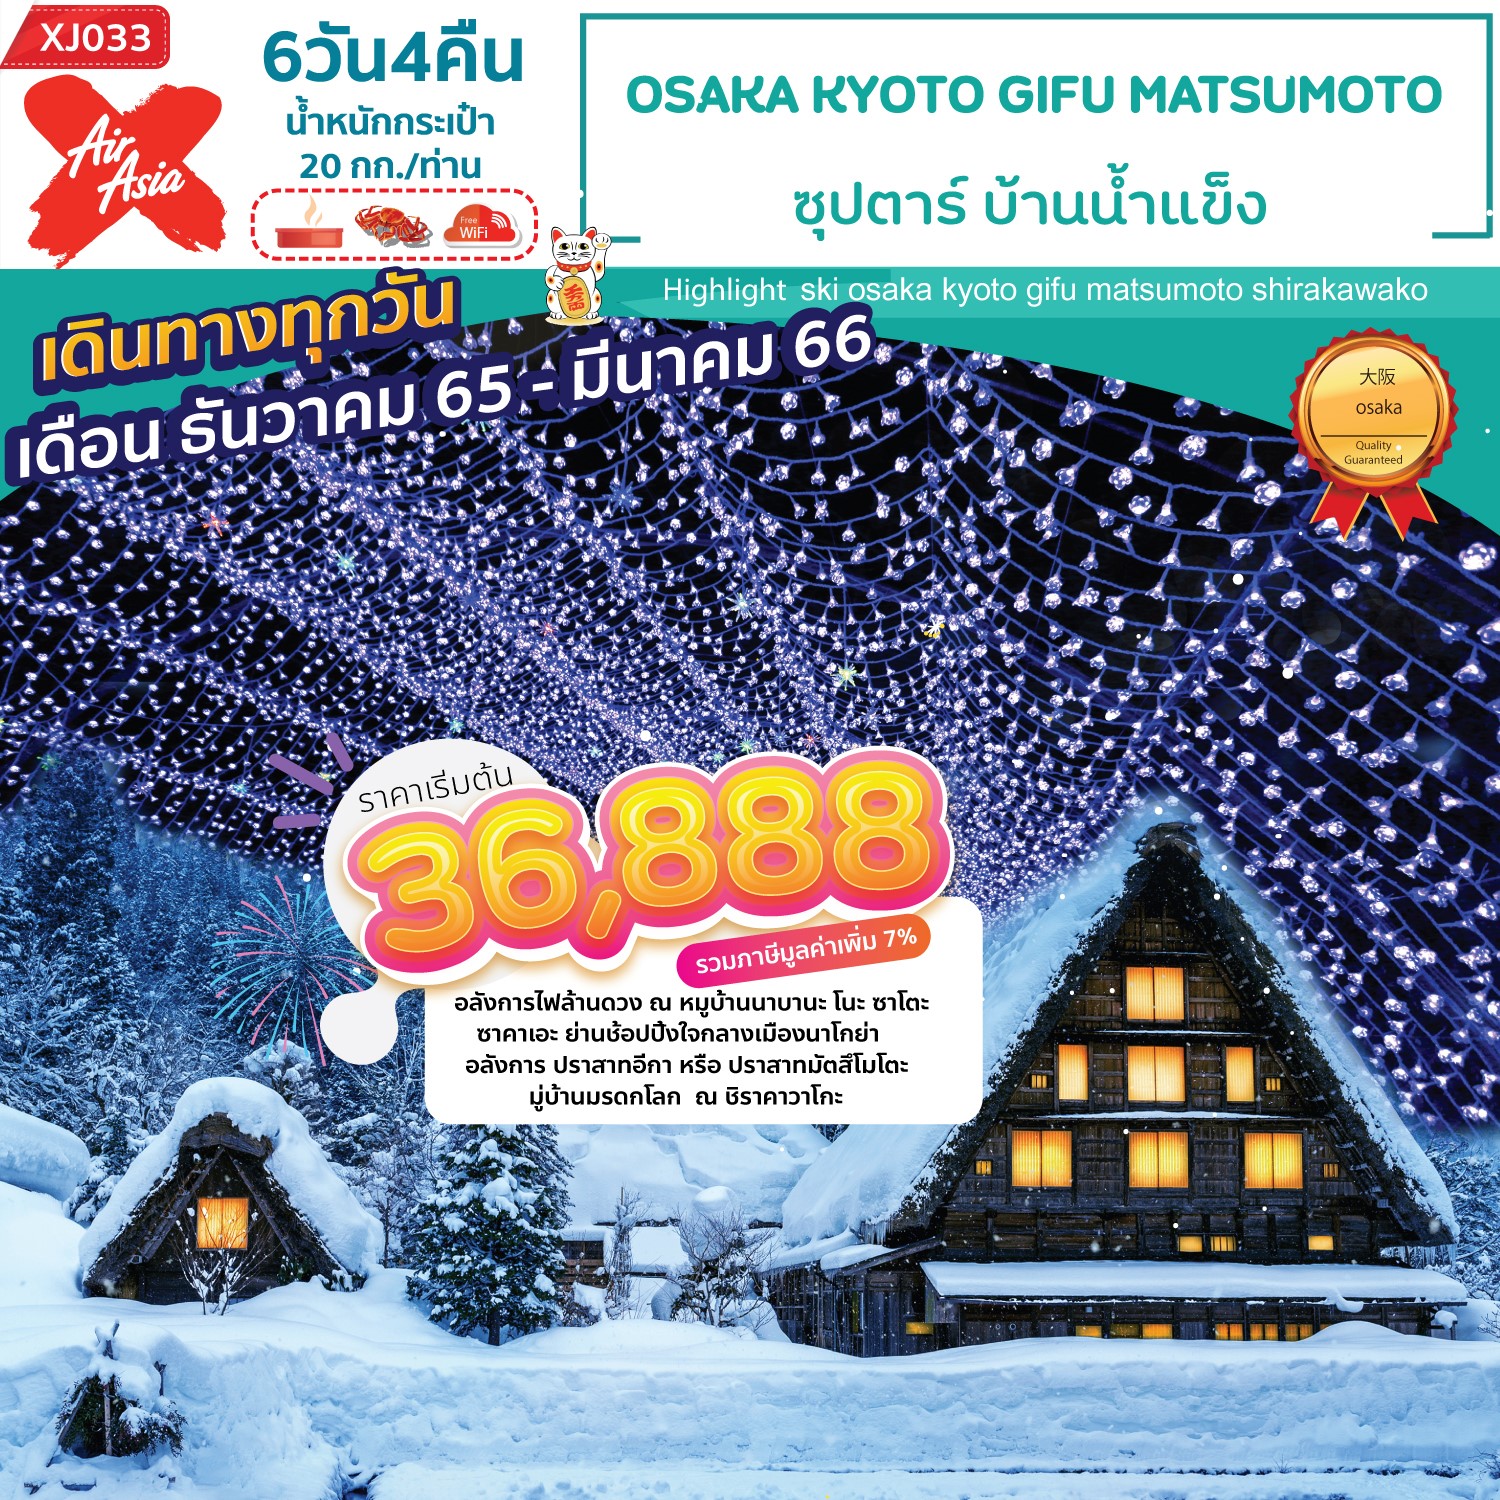 XJ033 - OSAKA KYOTO GIFU MATSUMOTO 6D4N ซุปตาร์ บ้านน้ำแข็ง